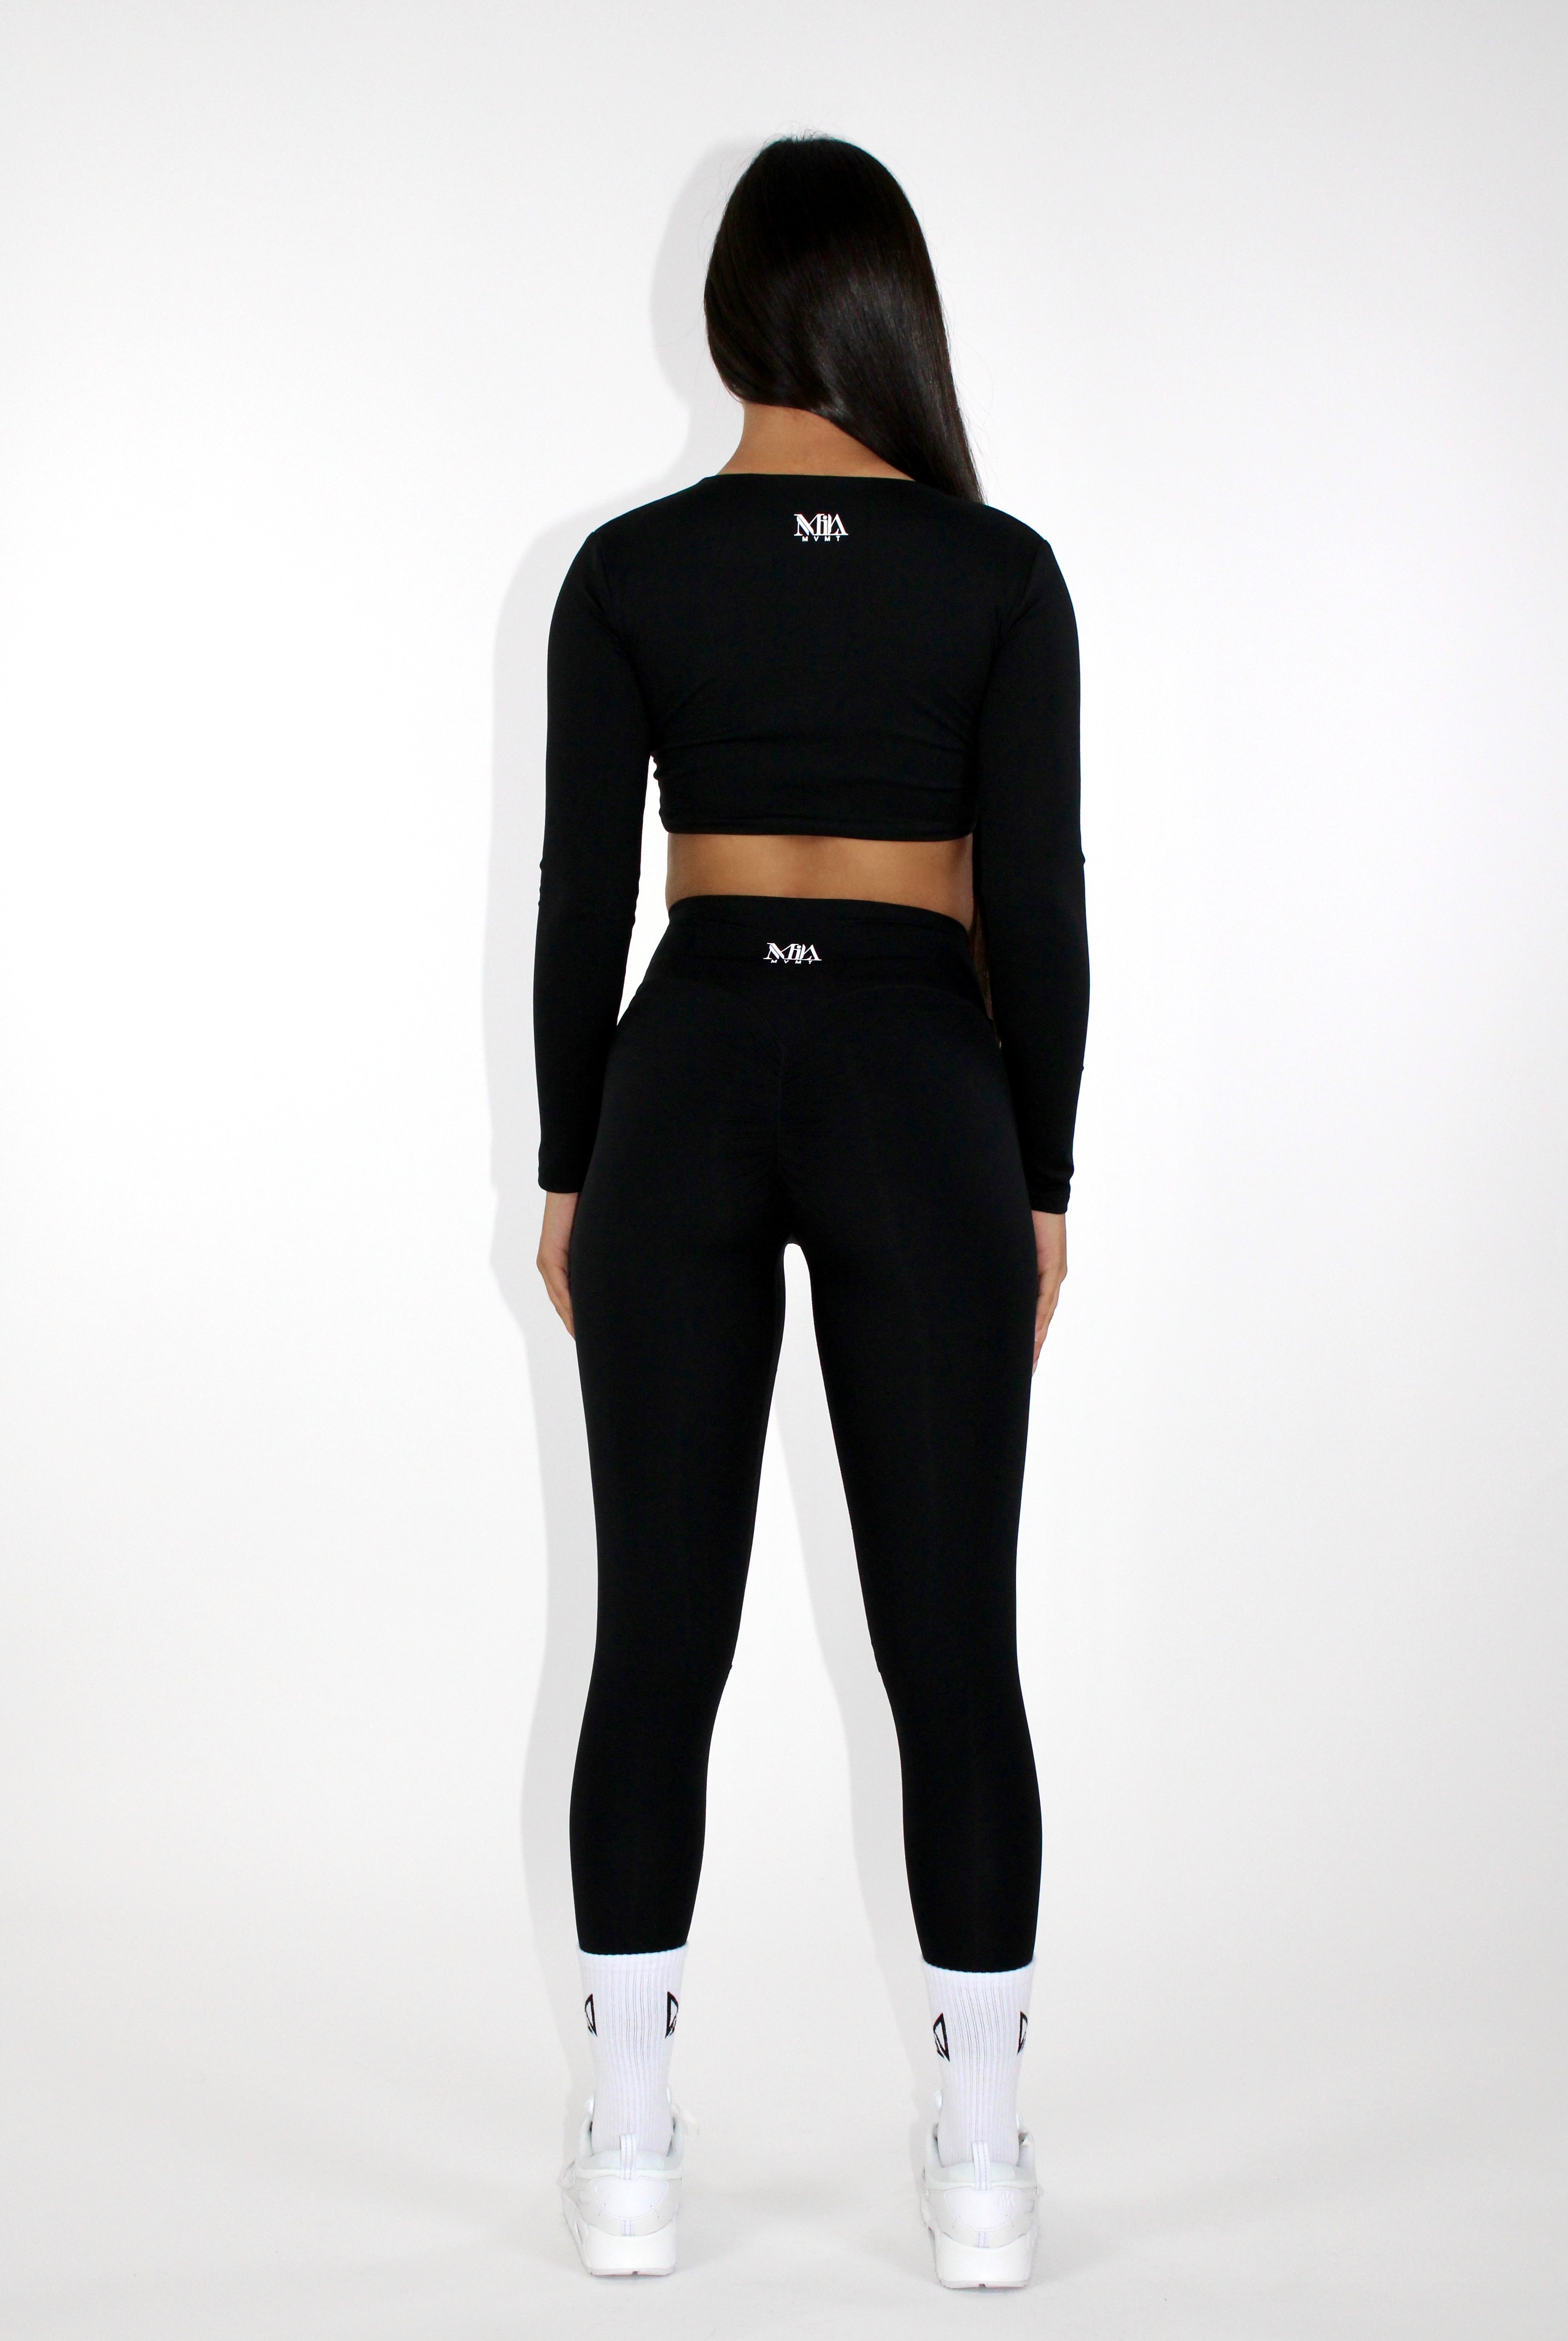 MILA MVMT Sportswear Gym Wear Workout Athleisure Crop Top Long Sleeve Black facing back